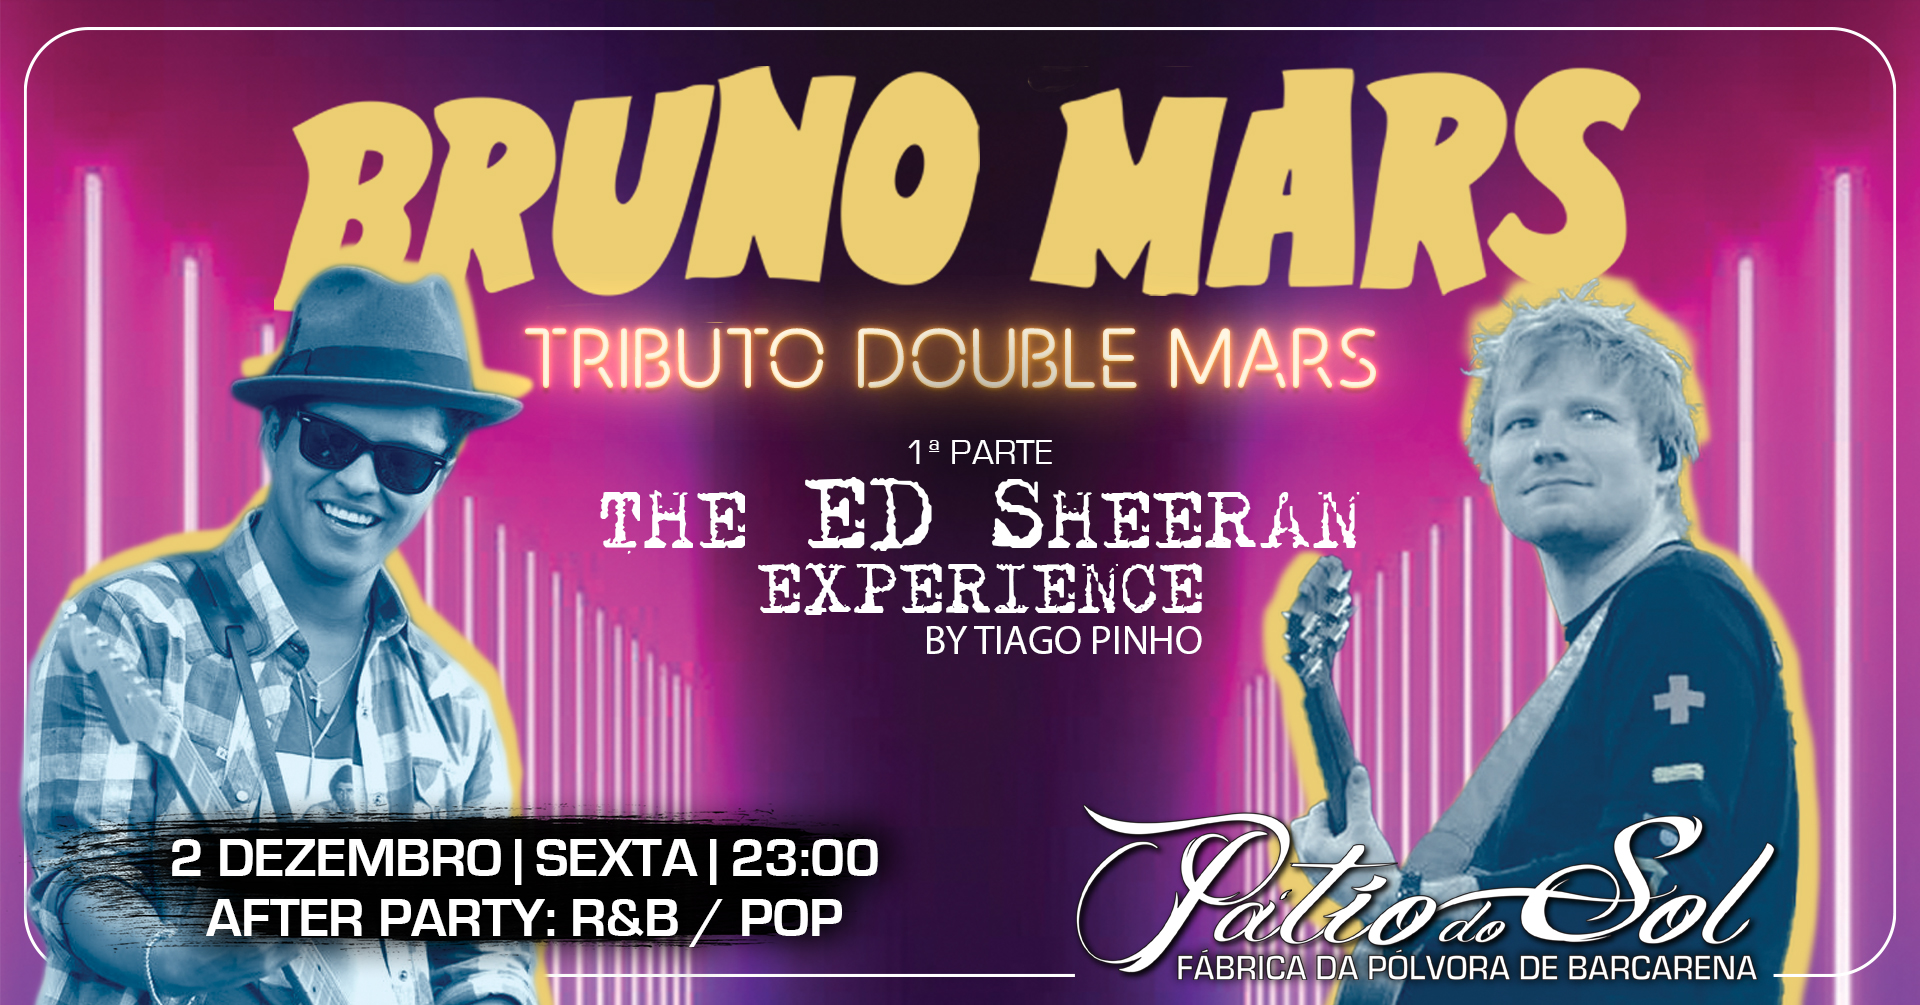 Double Mars - Trib. Bruno Mars | 1ª Parte: Ed Sheeran Experience | After Party: R&B / POP